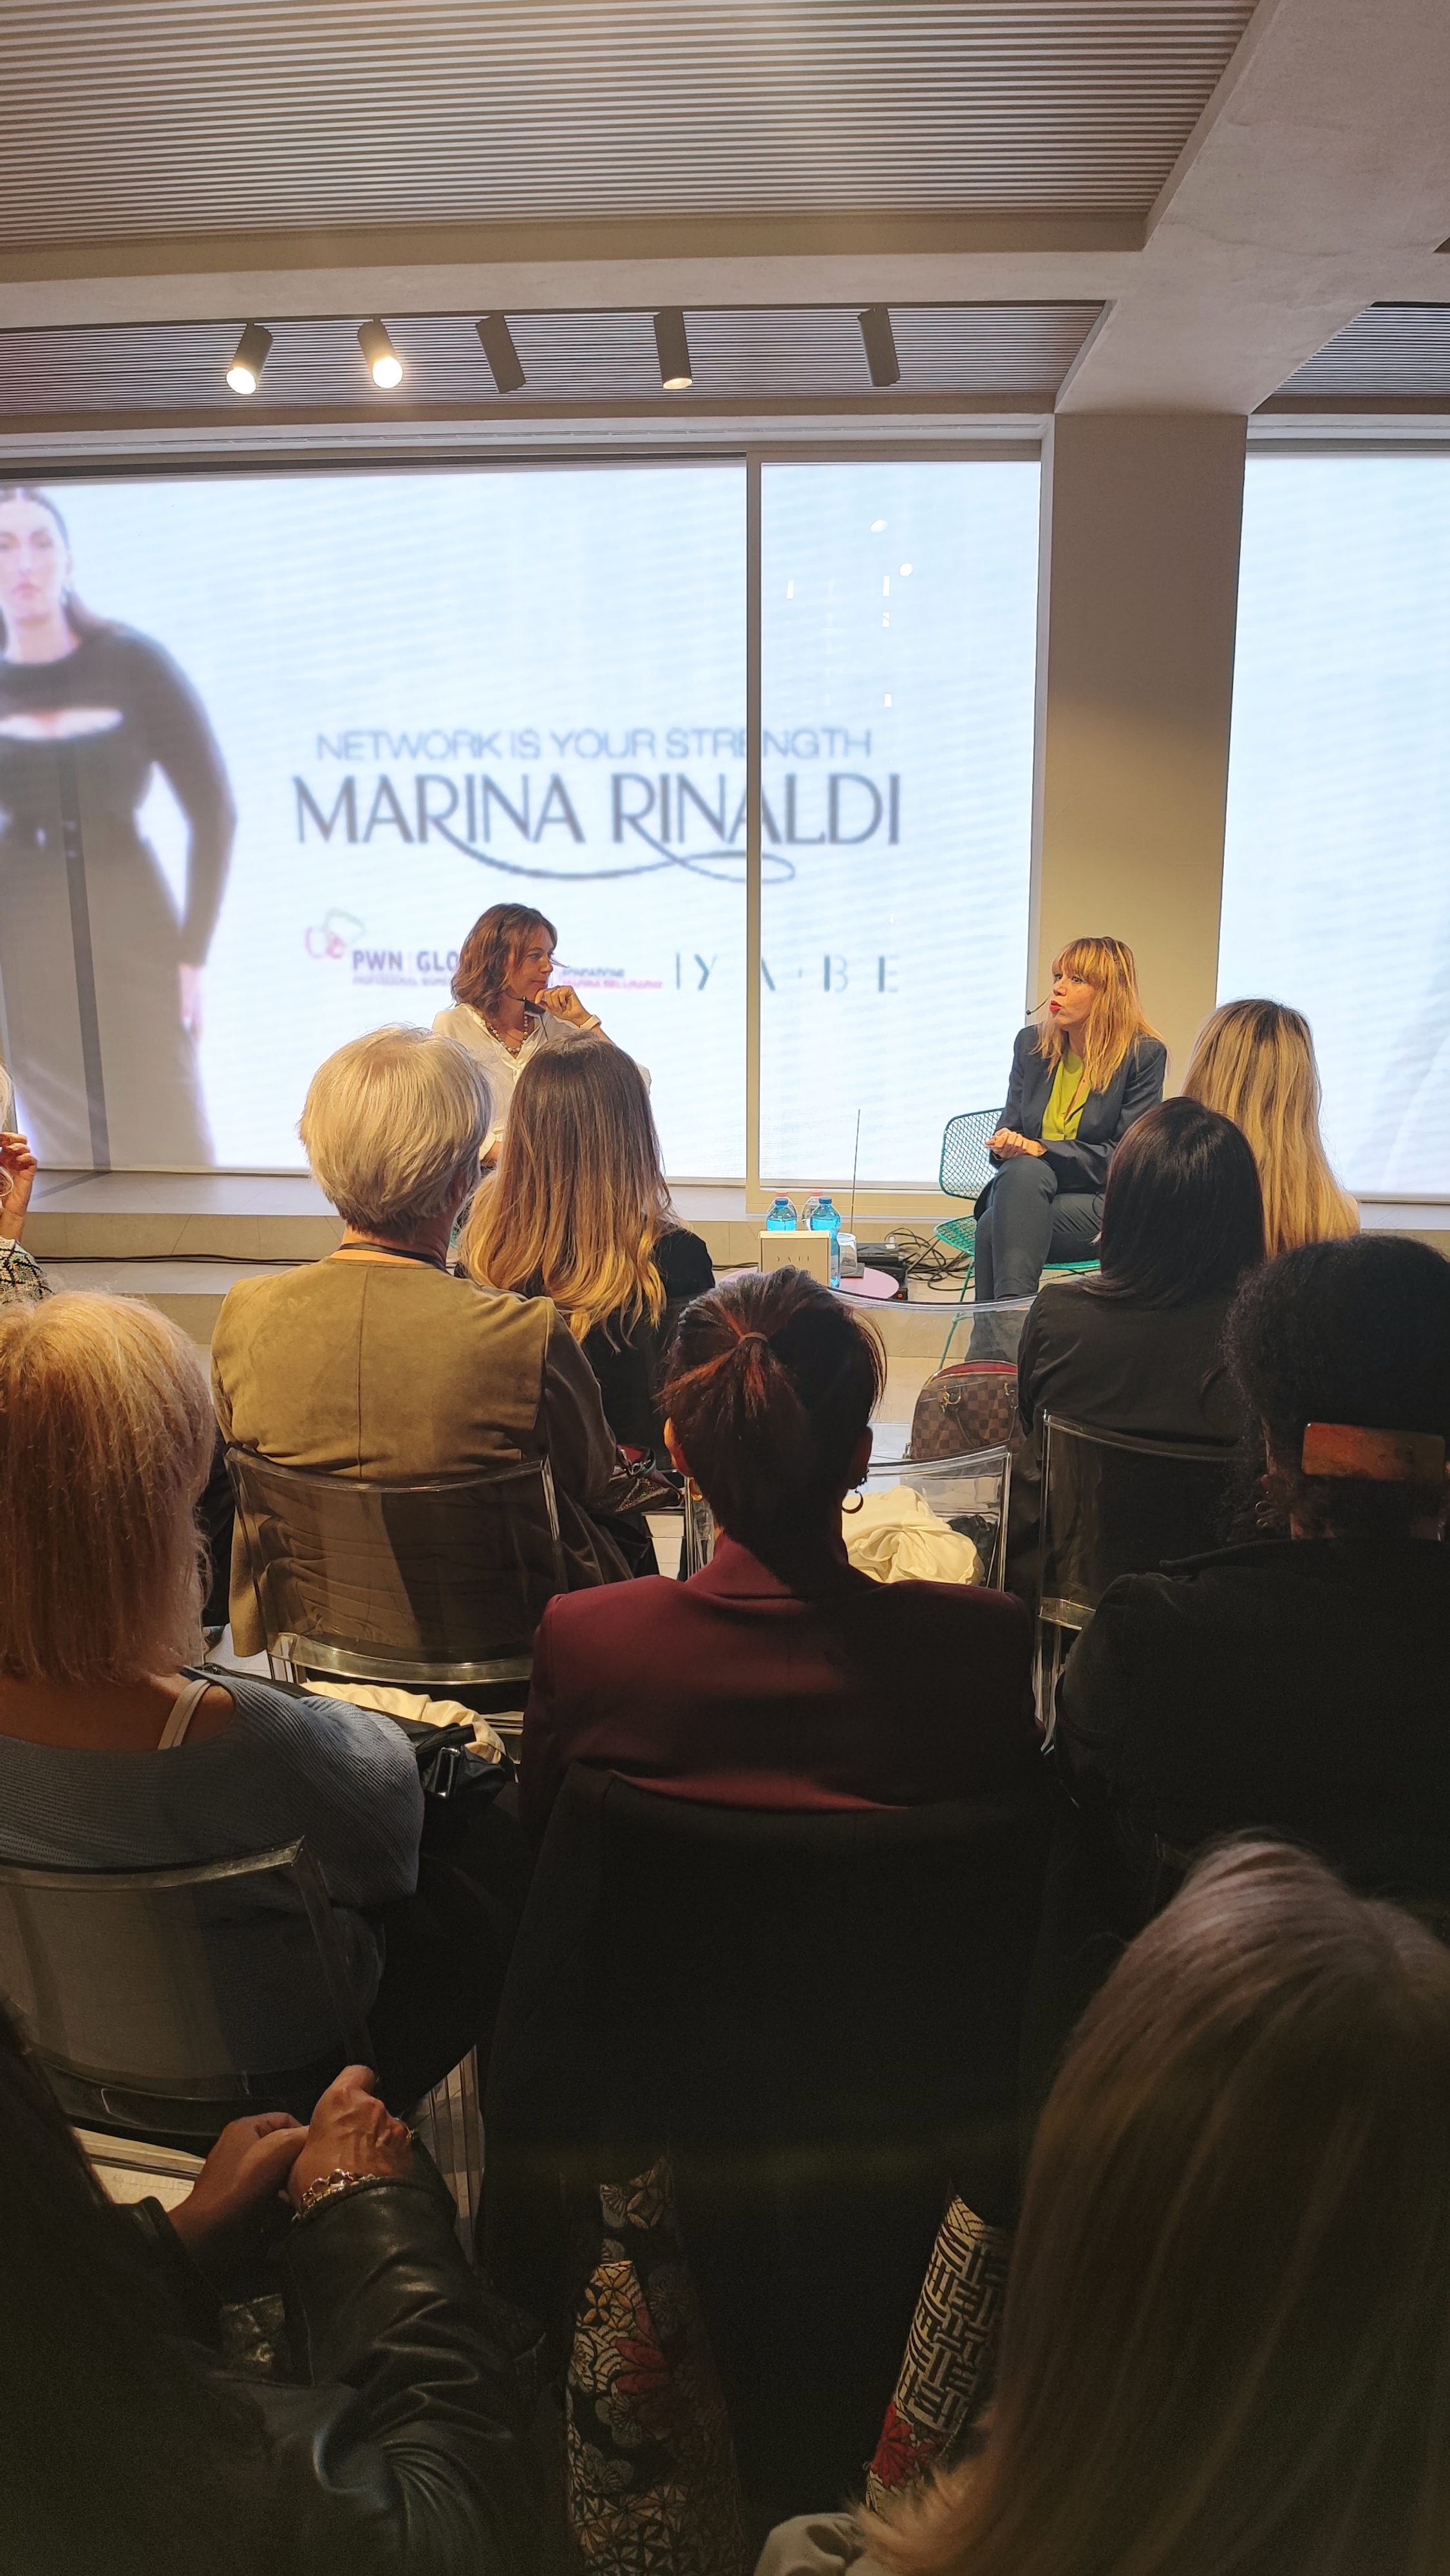 Marina Rinaldi event with PWN Milan